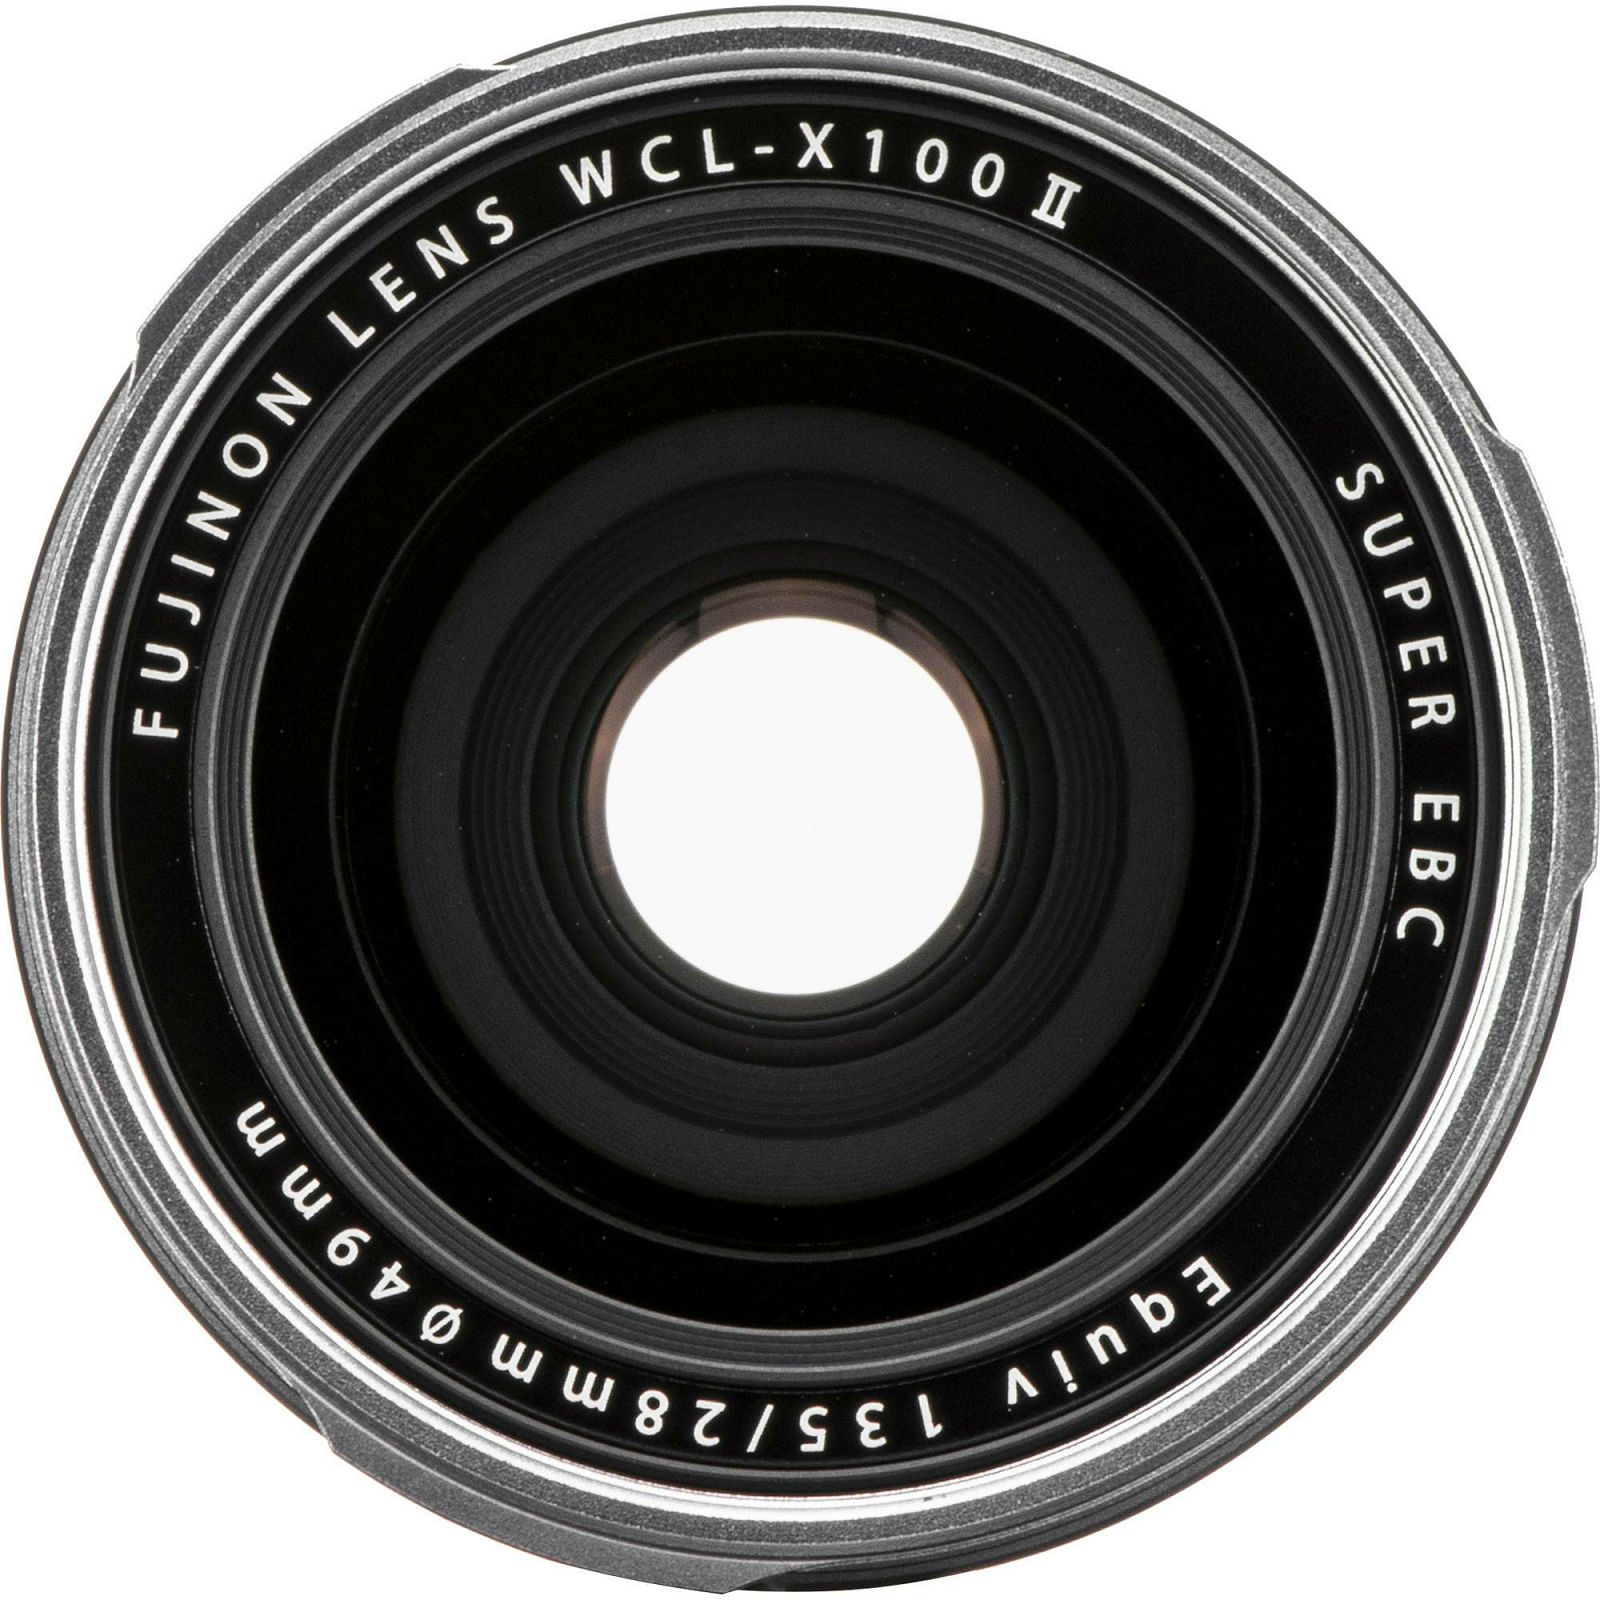 Fujifilm WCL-X100 II Silver 0.8x Wide Angle Conversion Lens širokokutni konverter predleća za fotoaparat Fuji X100F, X100S, X100T (16534716)